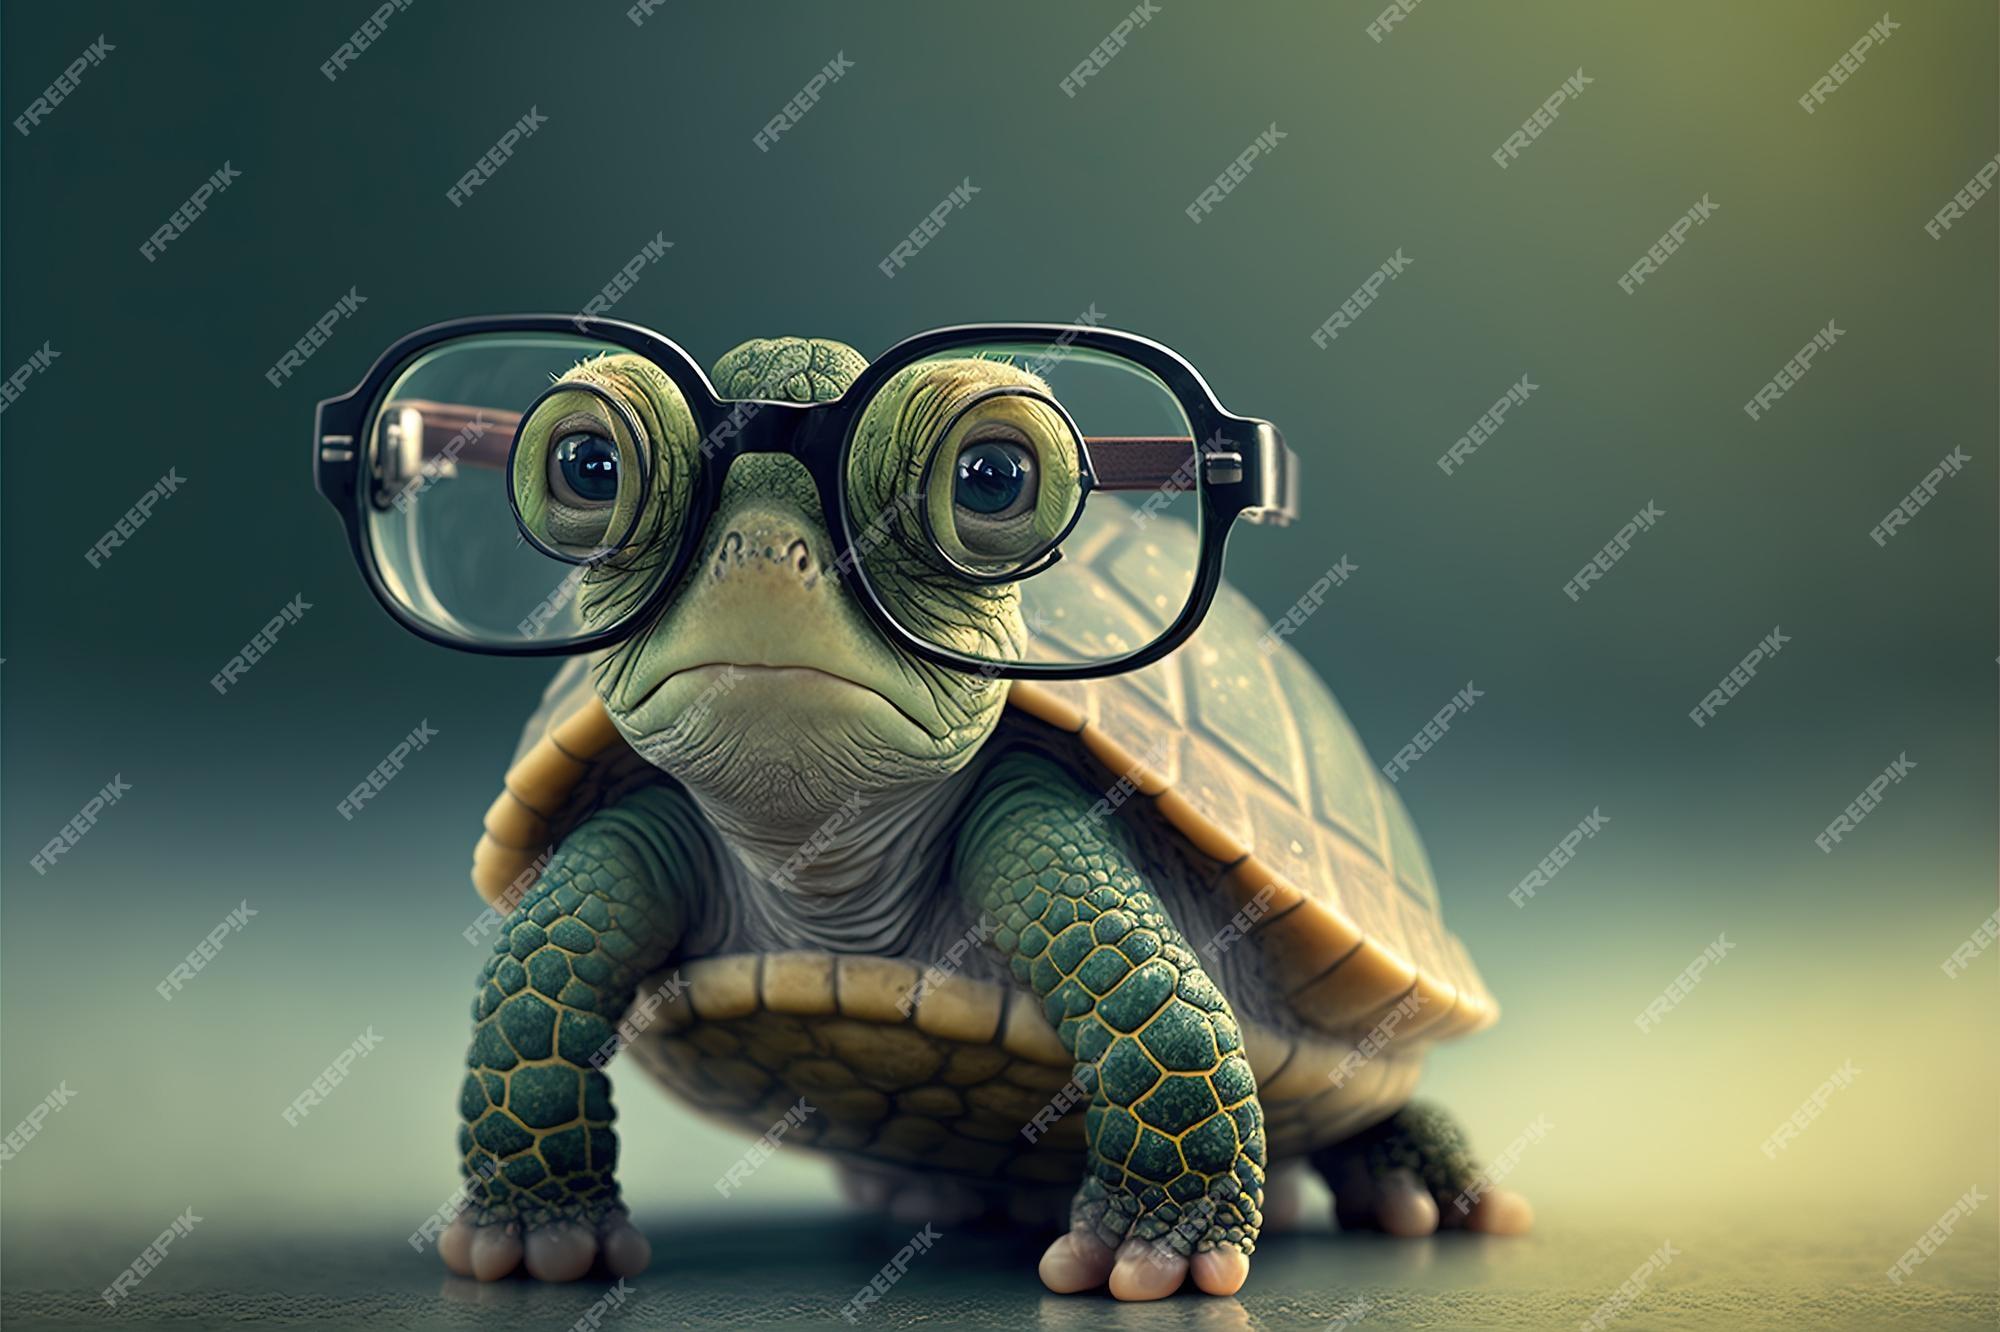 Premium Photo High Resolution Image Cute Little Green Turtle